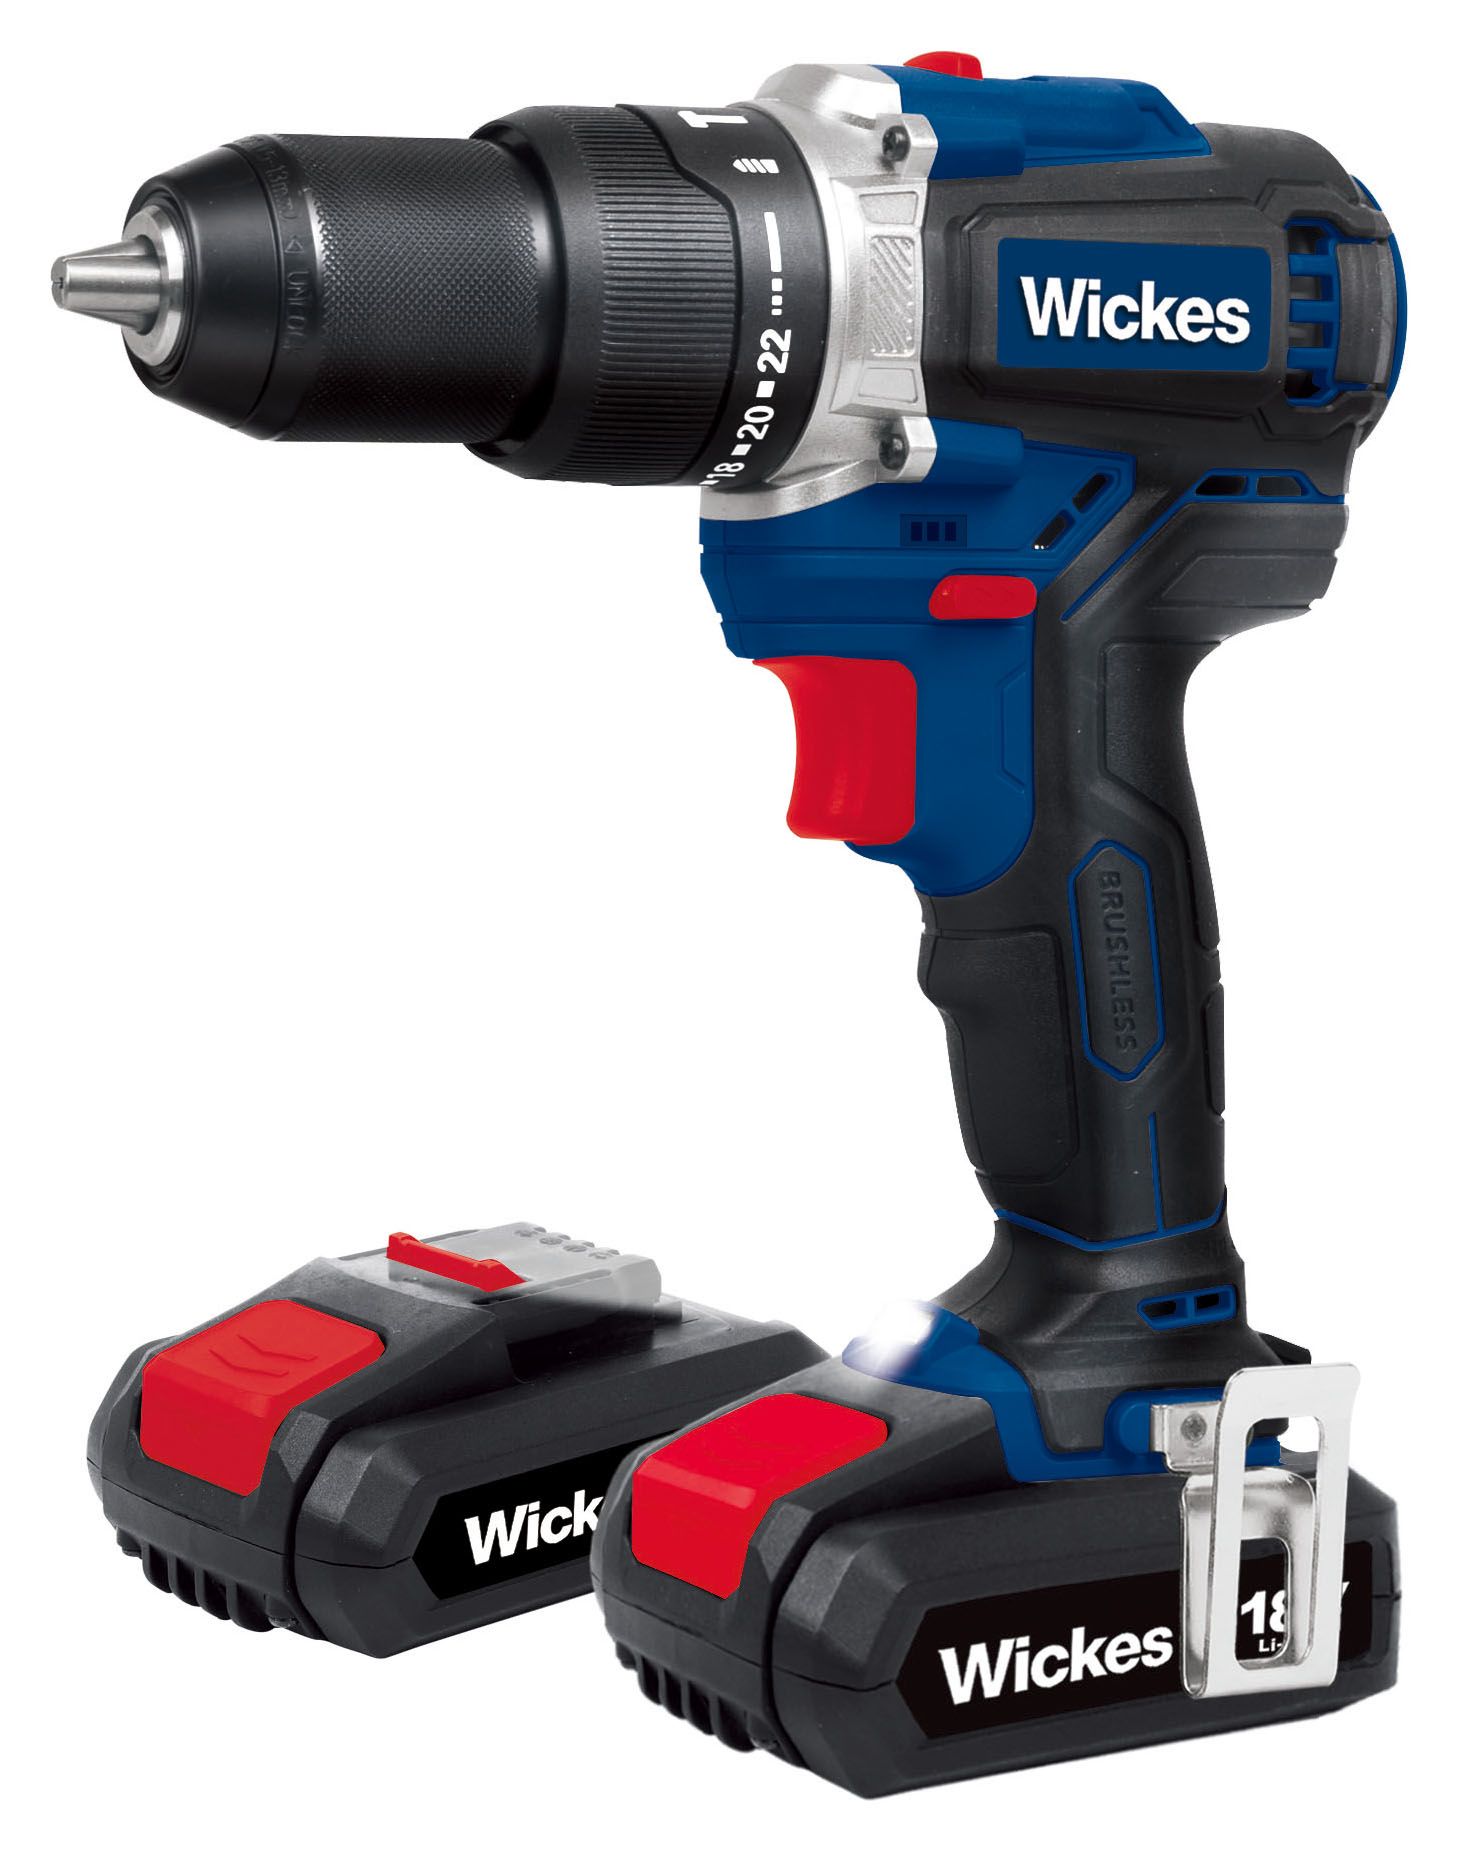 Wickes 18V 2 x 2.0Ah Li-ion Cordless Brushless Combi Drill